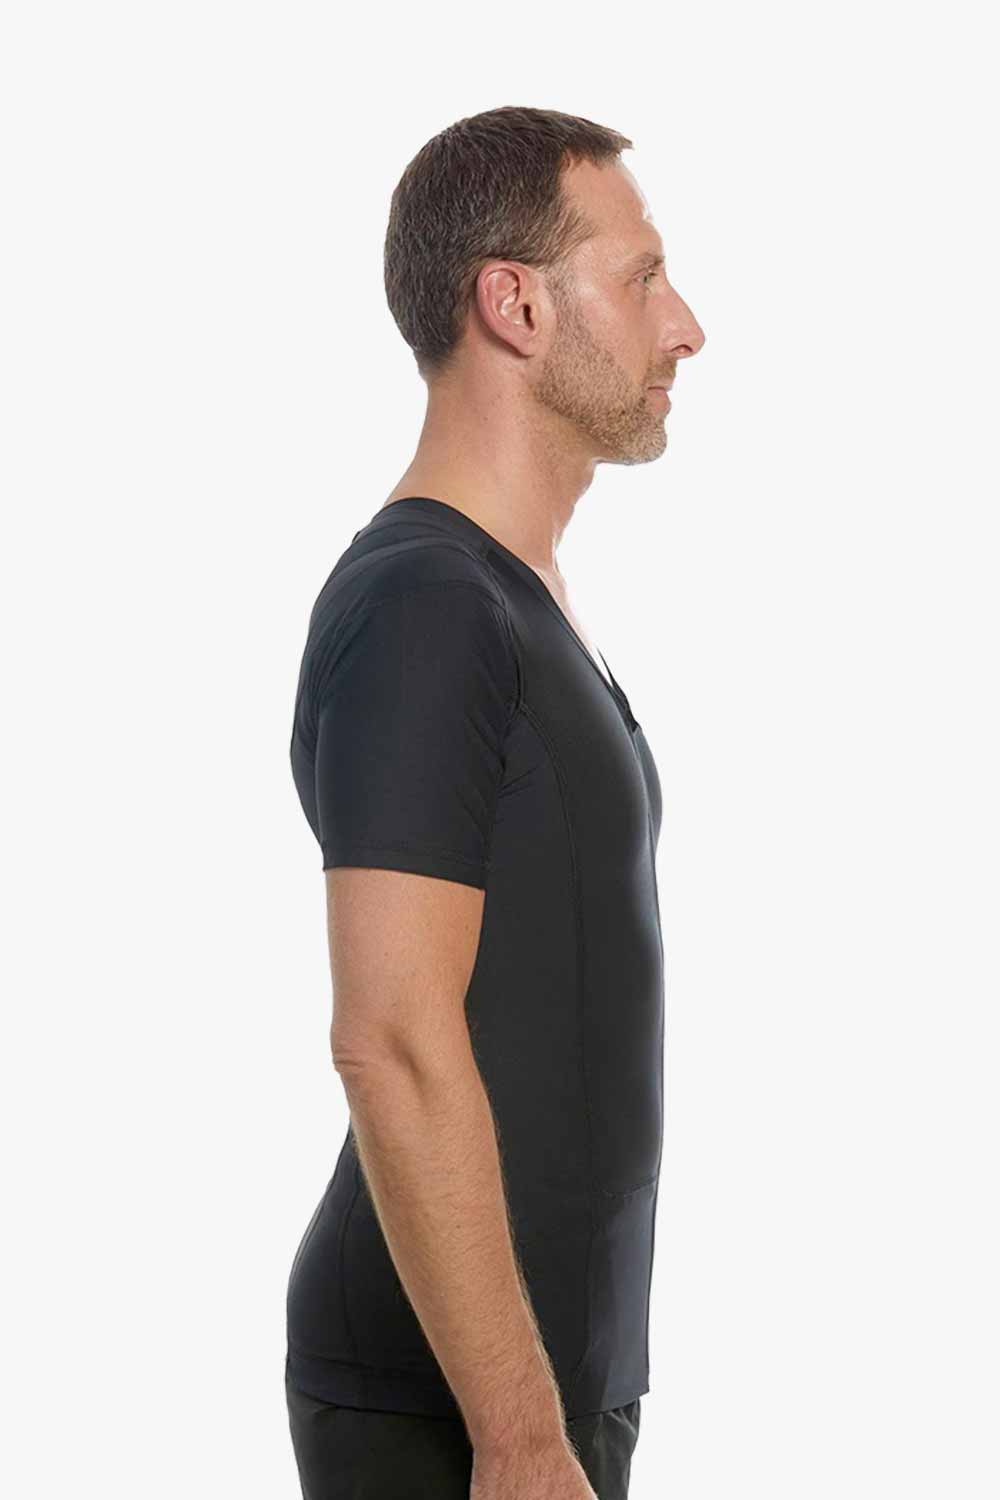 Men's Posture Shirt™ - Black